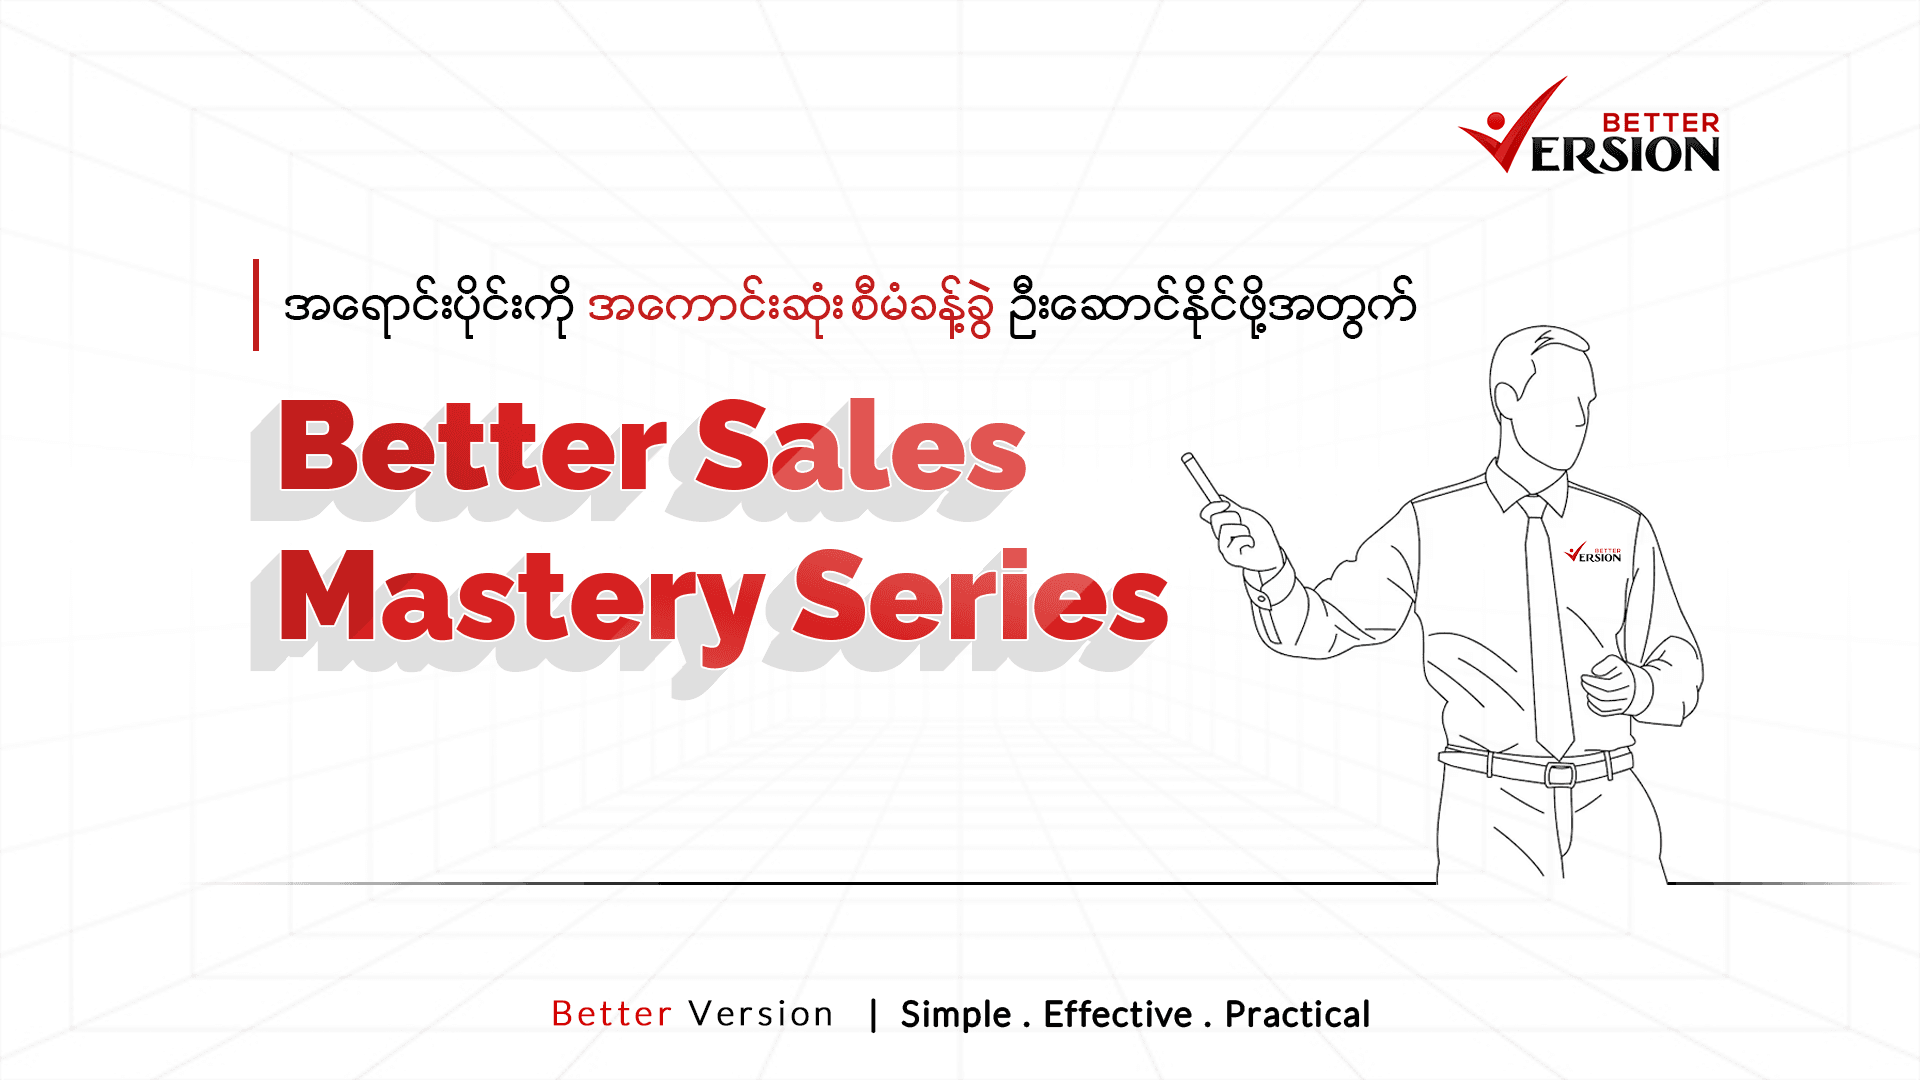 Better Sales Mastery Series (အရောင်းပိုင်းကို ကျွမ်းကျင်ပိုင်နိုင်ပြီး ရောင်းအားတက်စေဖို့)